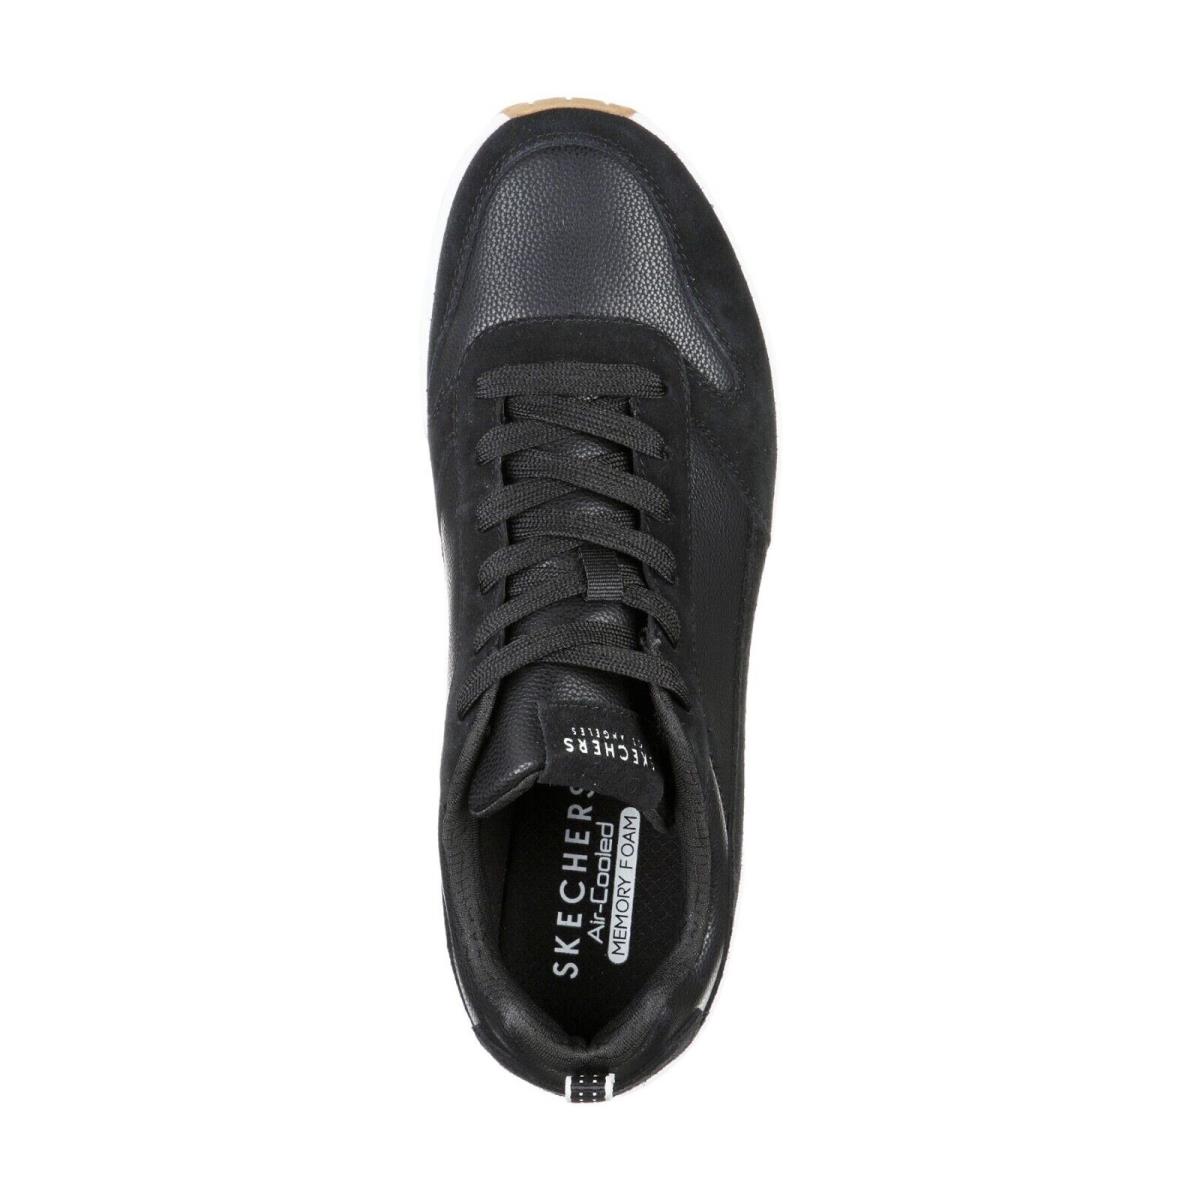 Skechers shoes Uno Stacre - Black/White 0